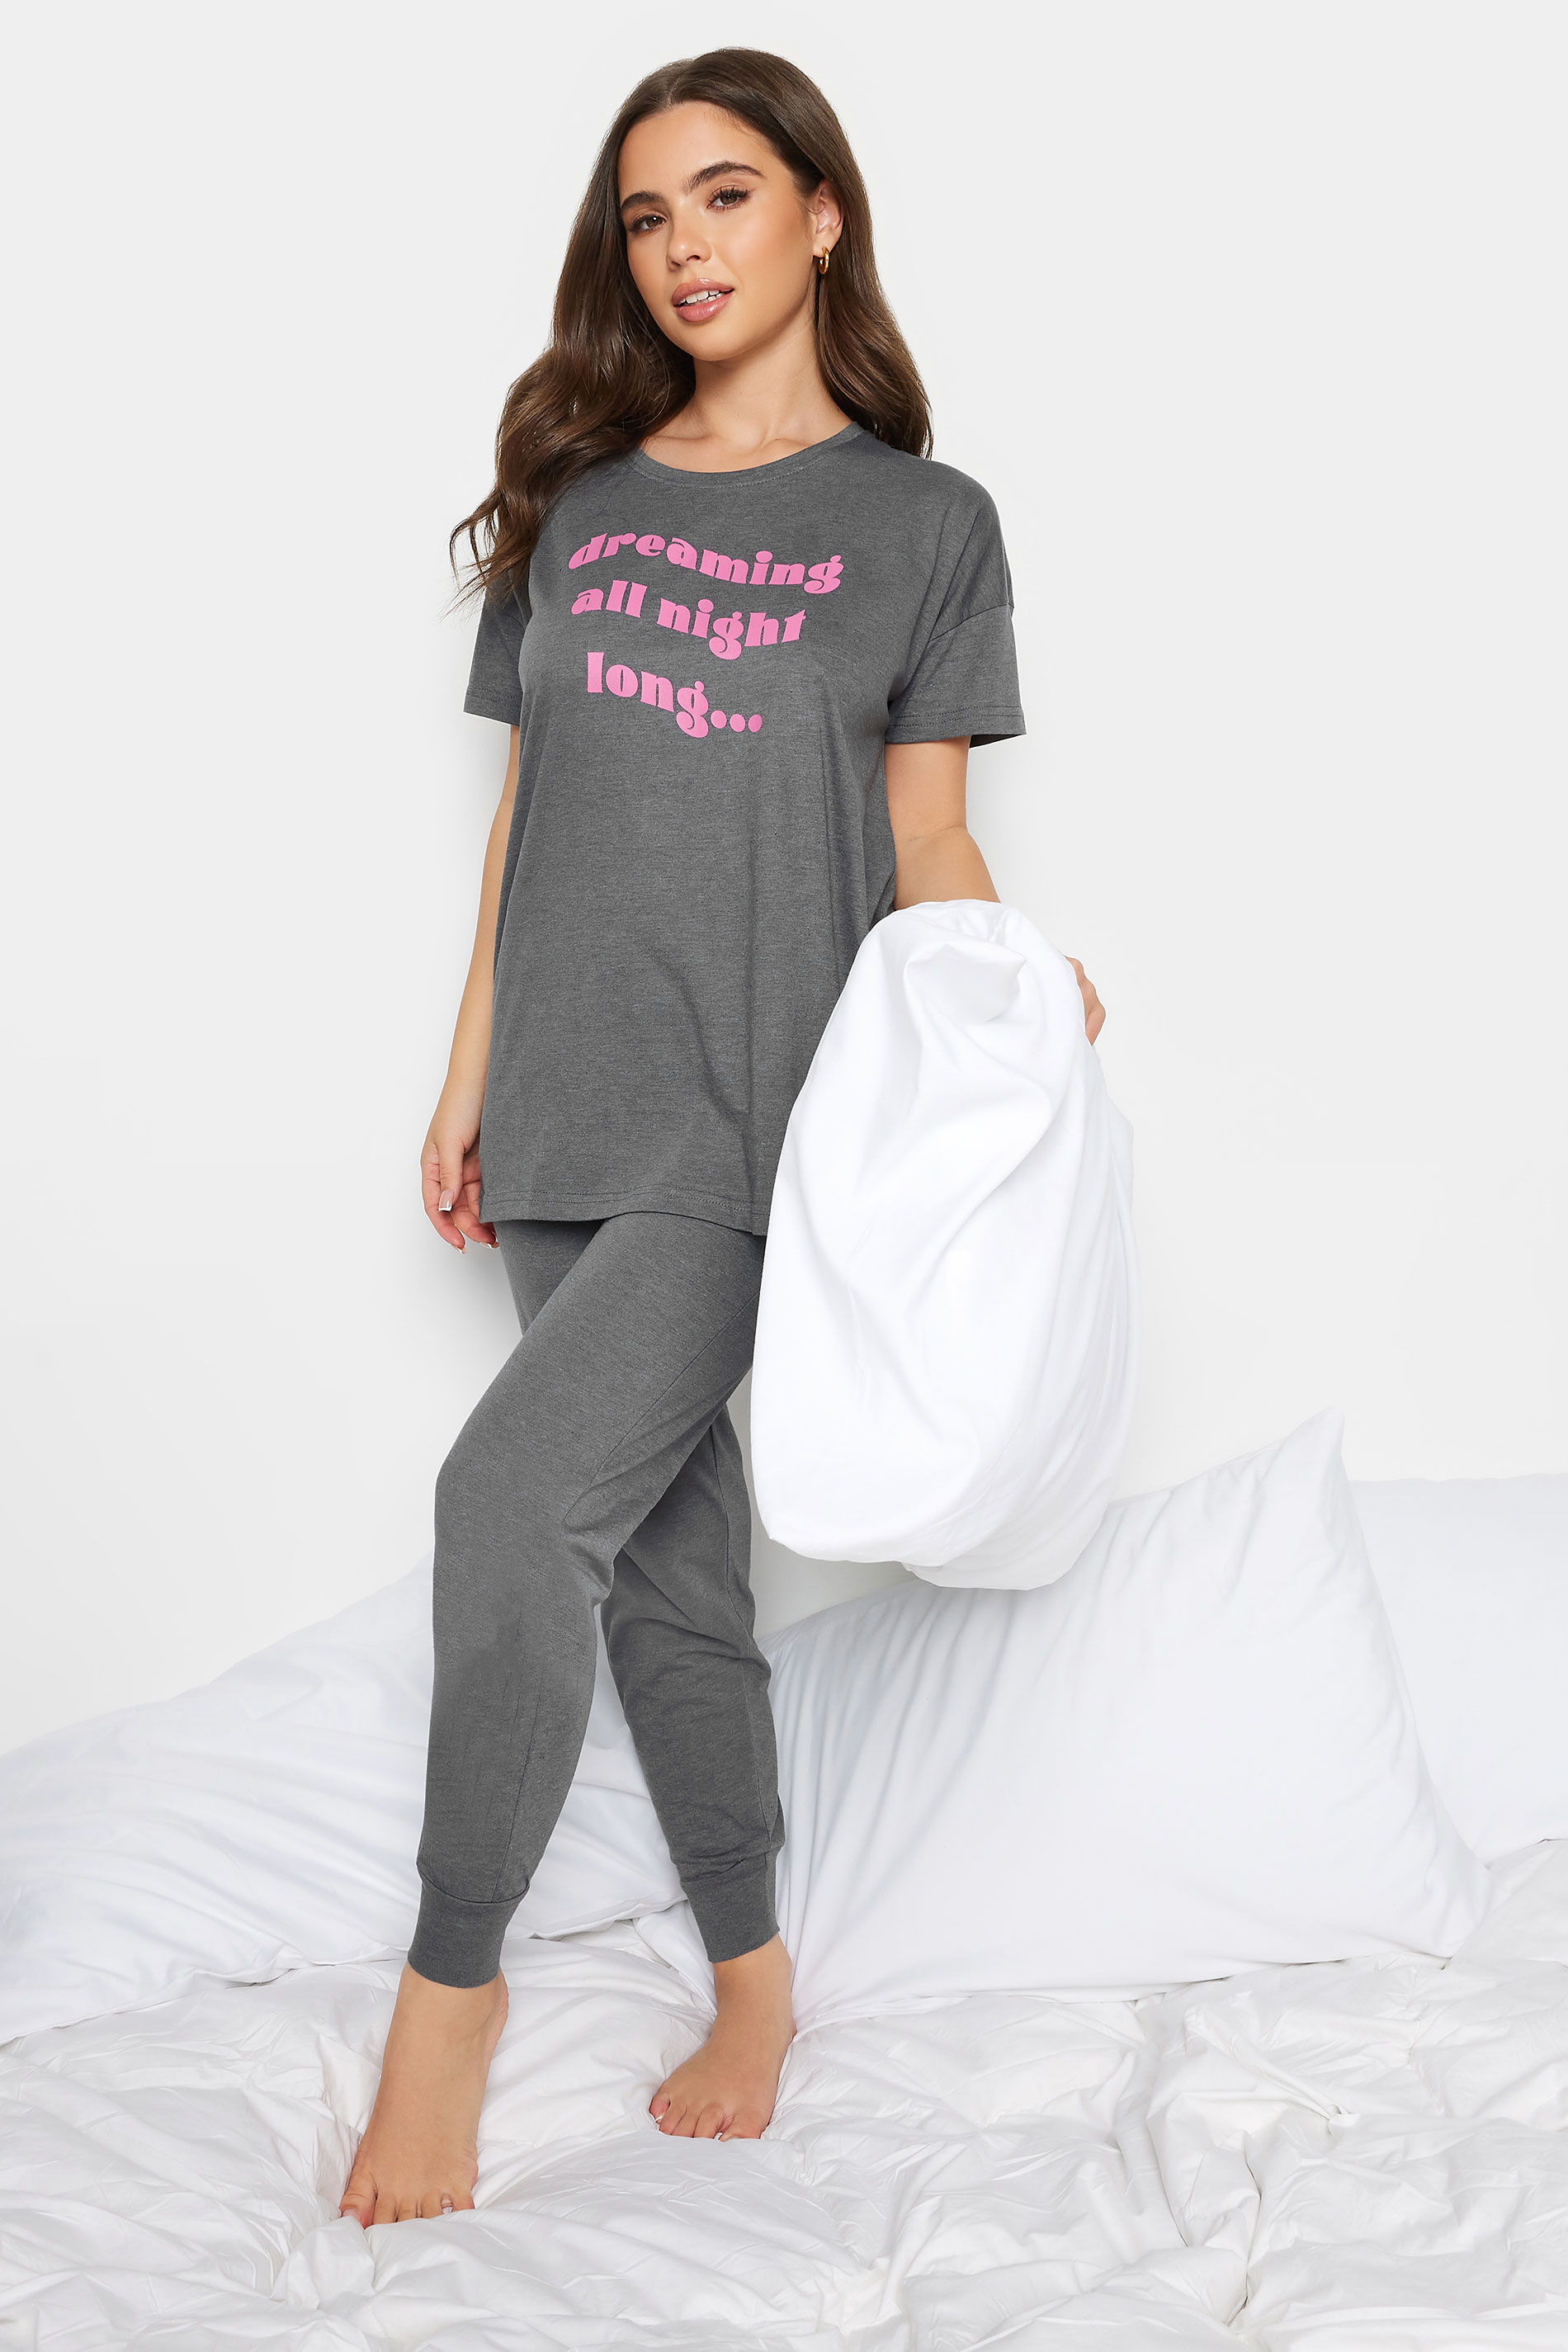 PixieGirl Petite Womens Charcoal Grey 'Dreaming All Night Long' Slogan Pyjama Set | PixieGirl 2